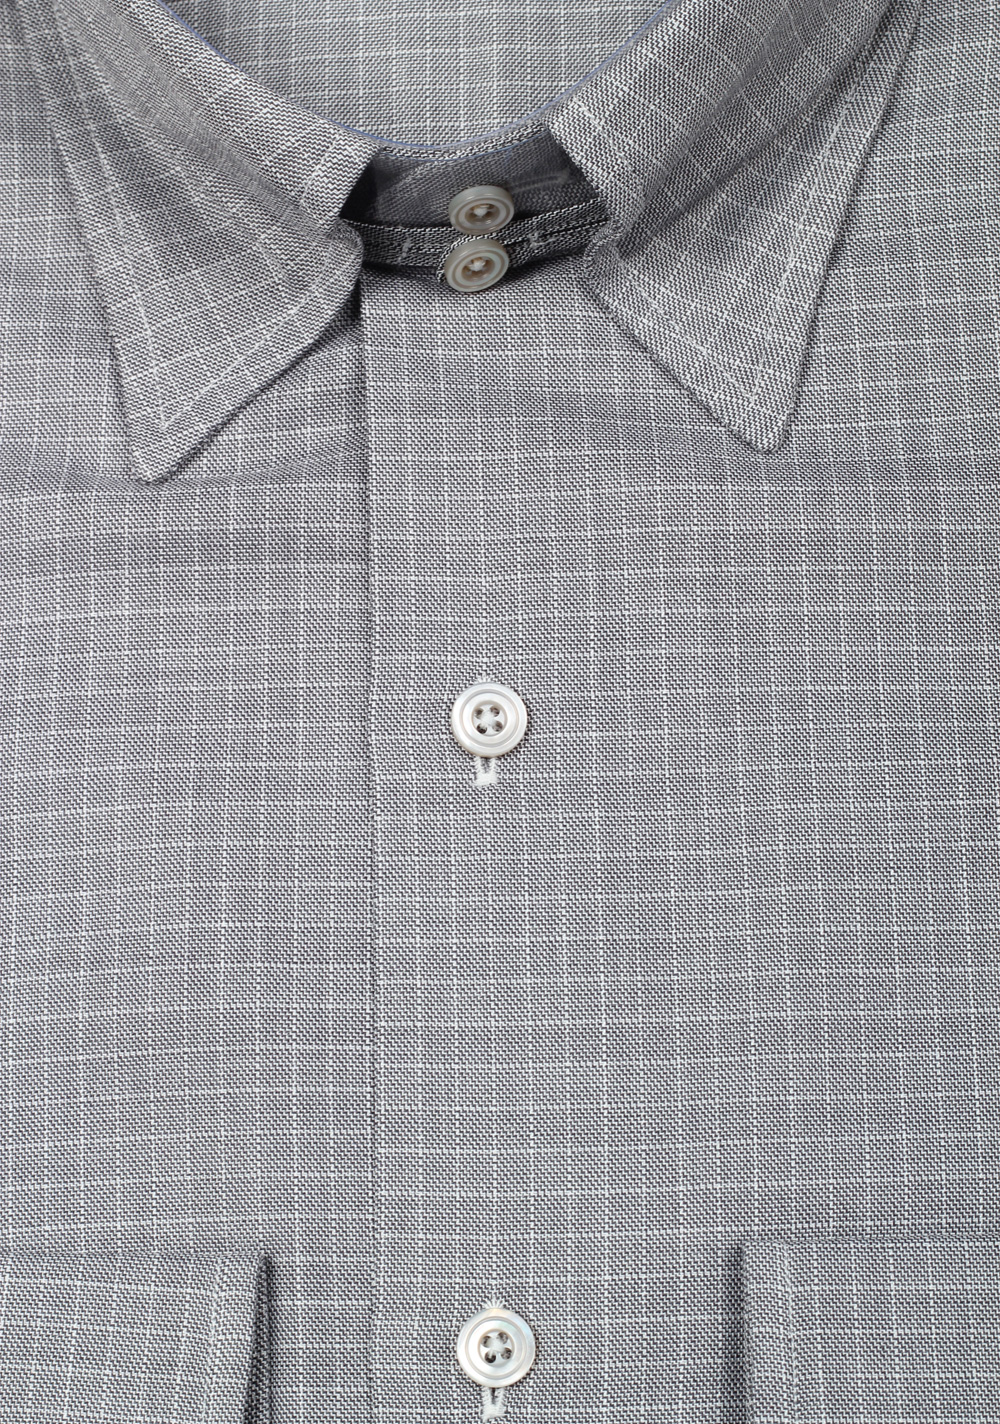 TOM FORD Checked Gray High Collar Dress Shirt Size 40 / 15,75 U.S. | Costume Limité